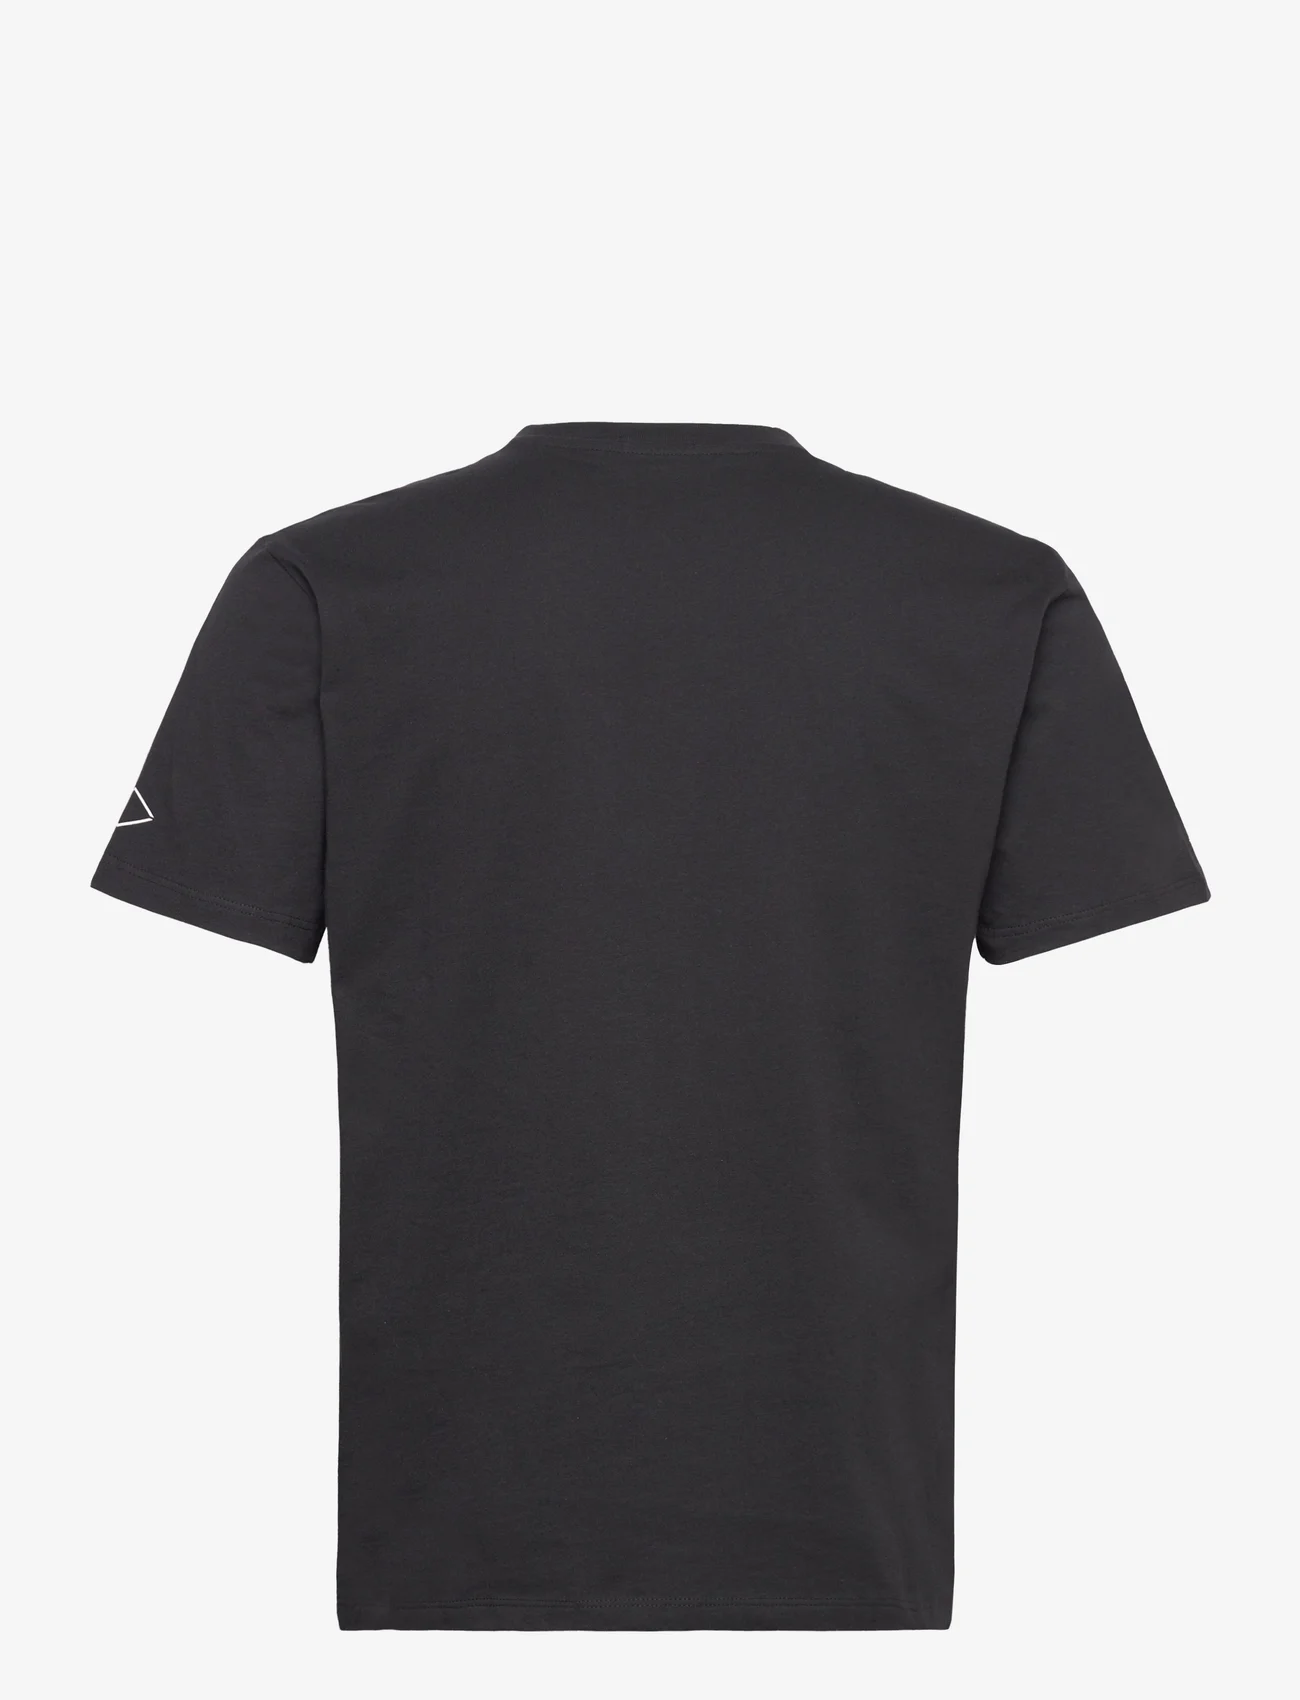 Replay - T-Shirt REGULAR - basis-t-skjorter - black - 1